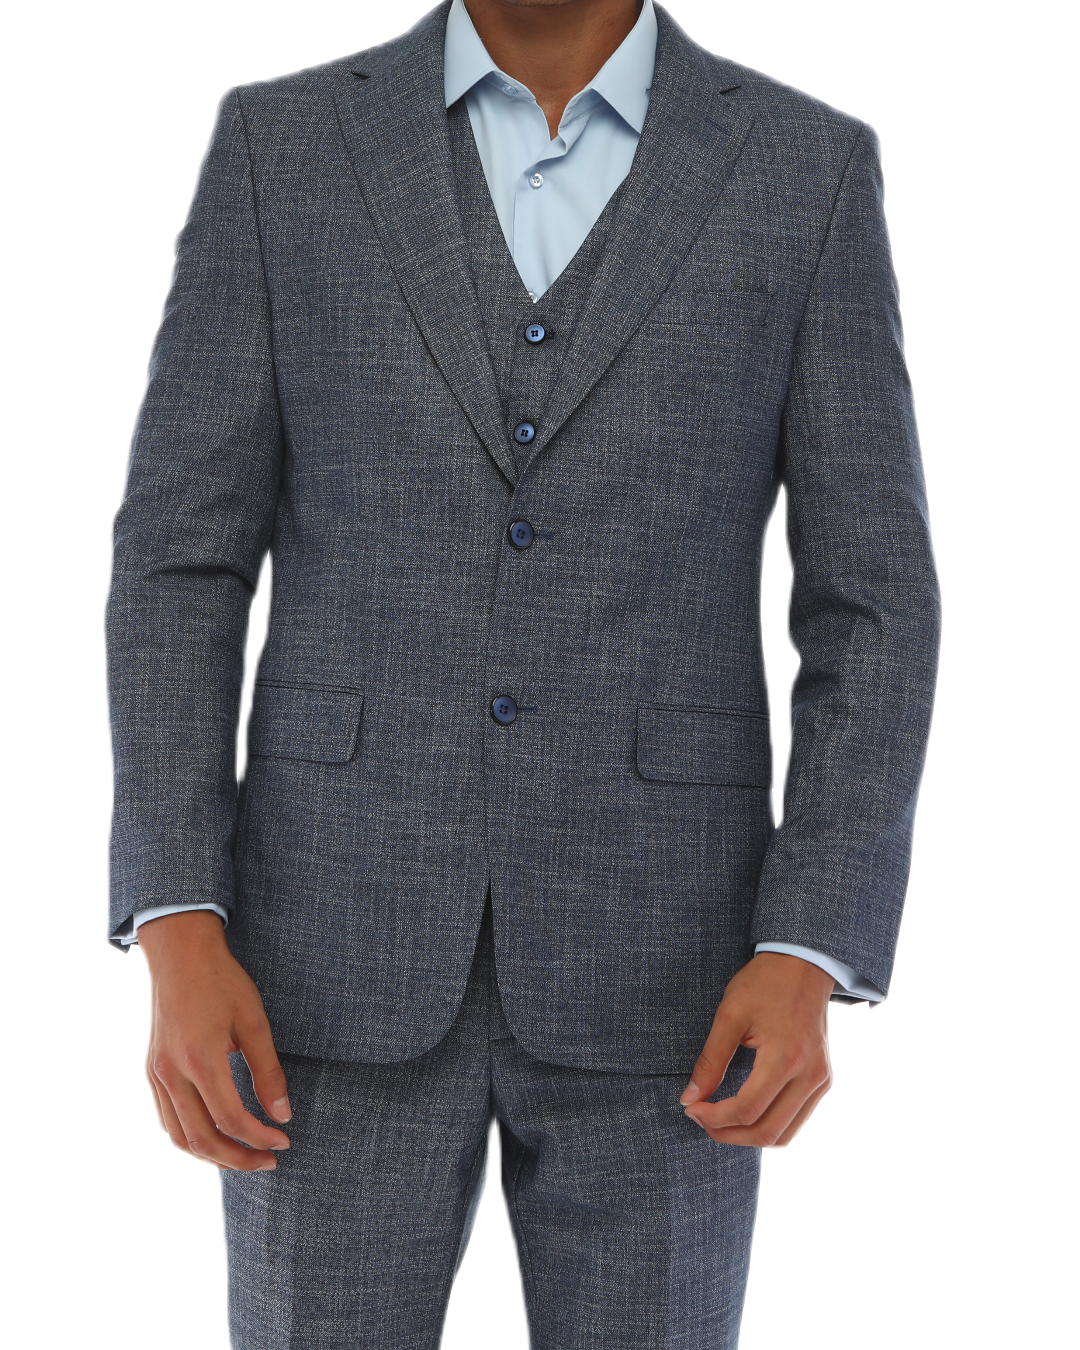 SAV BLUEIN - Blue Texture Three Piece Suit